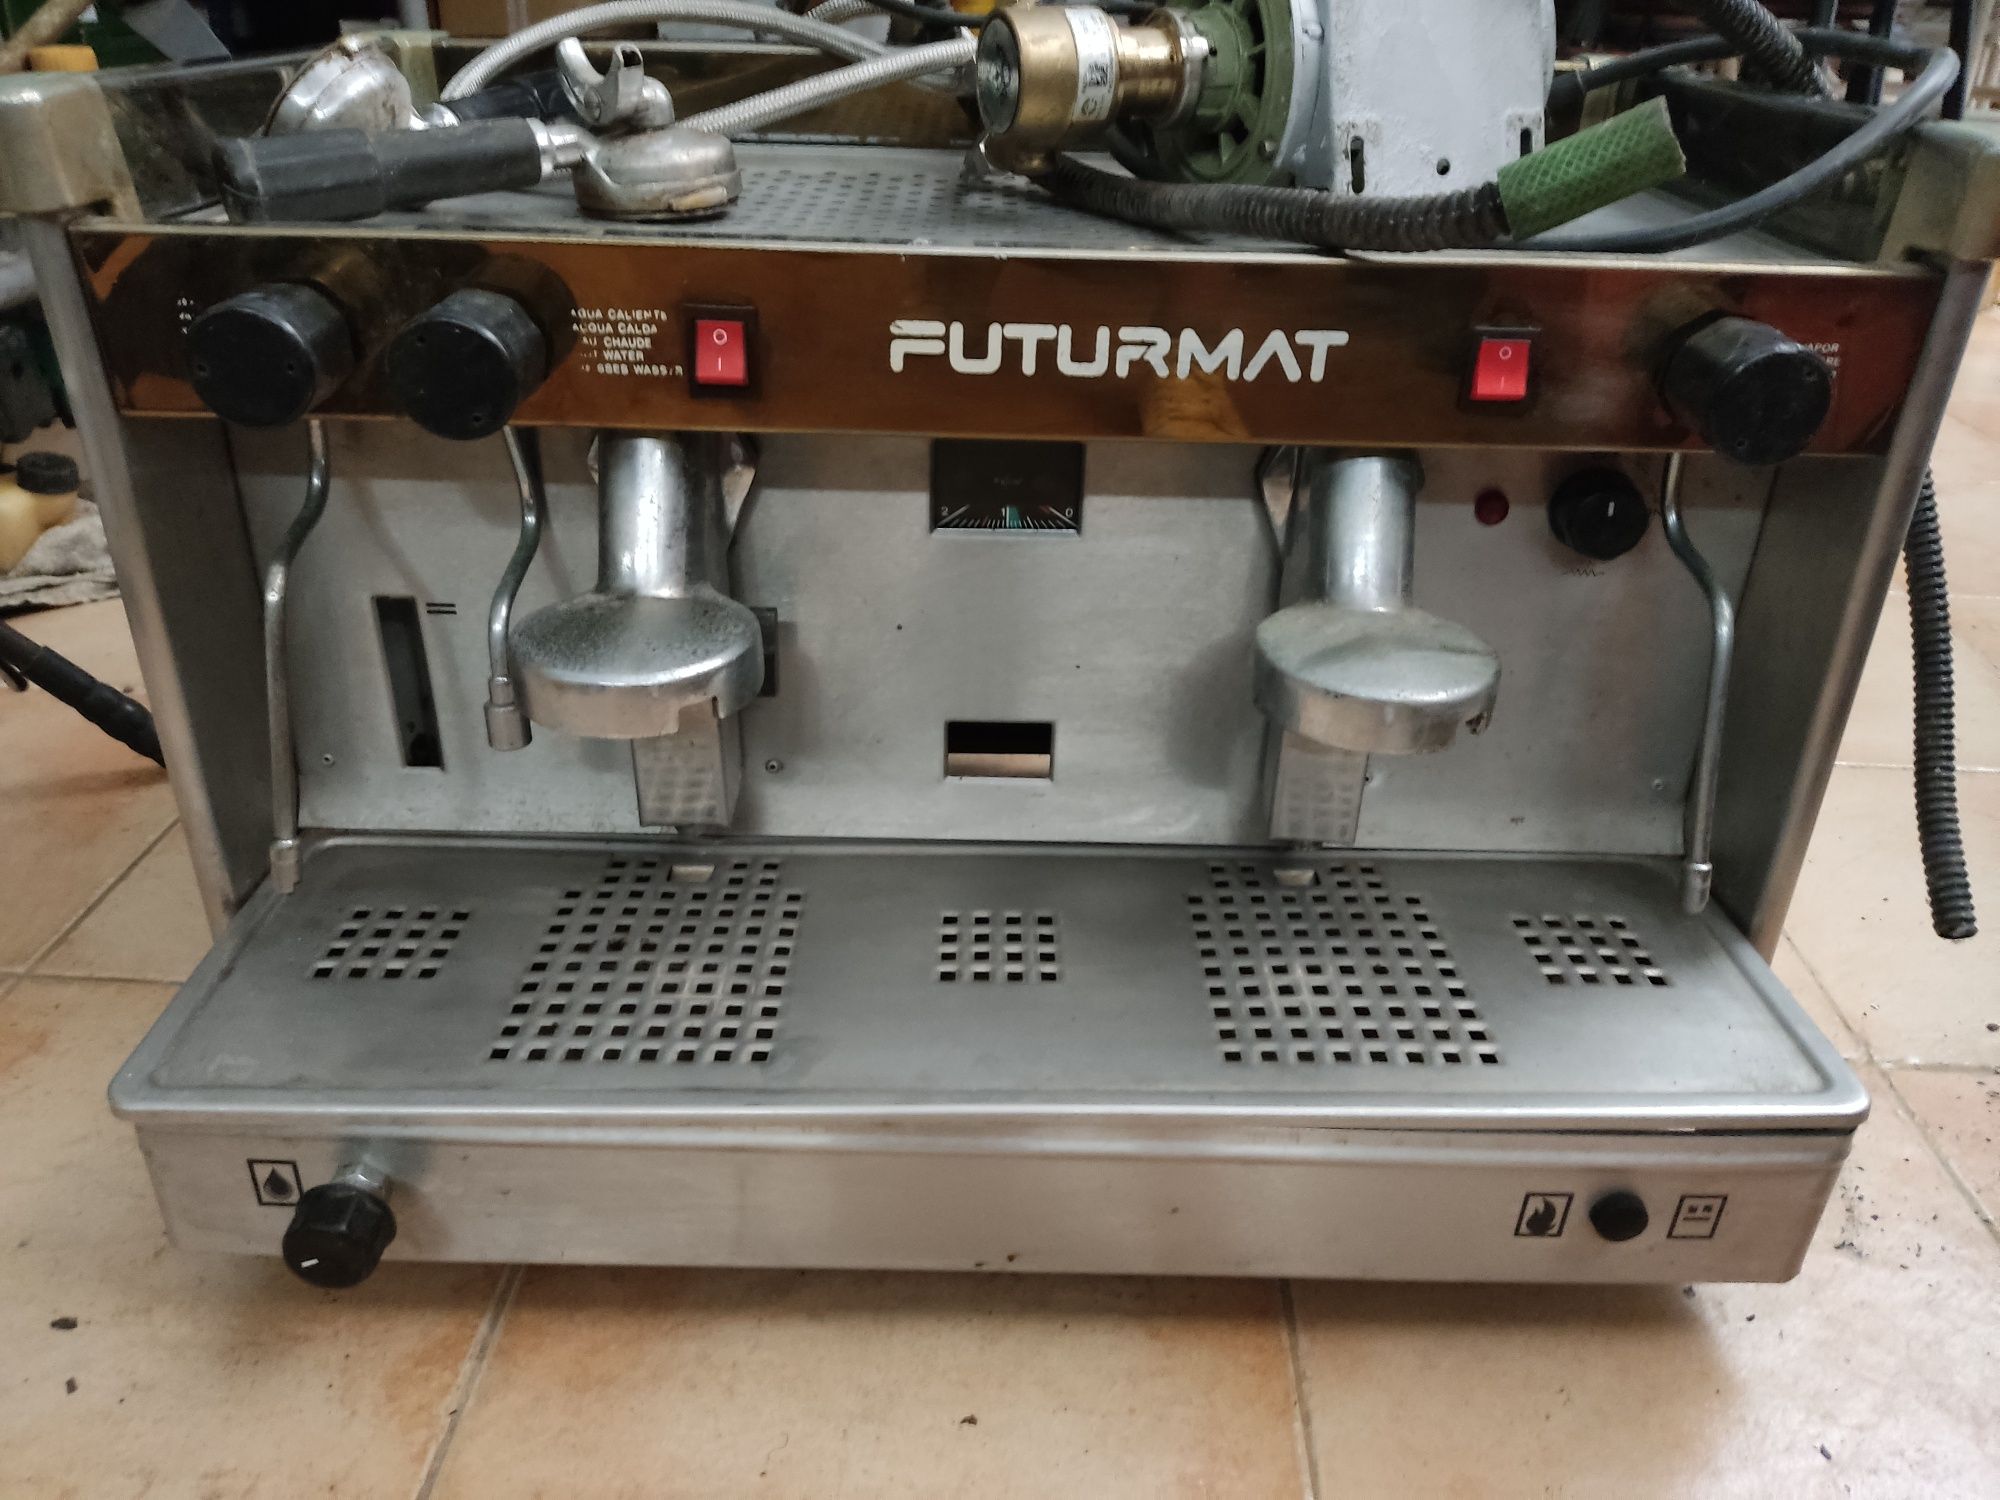 Máquina de café industrial